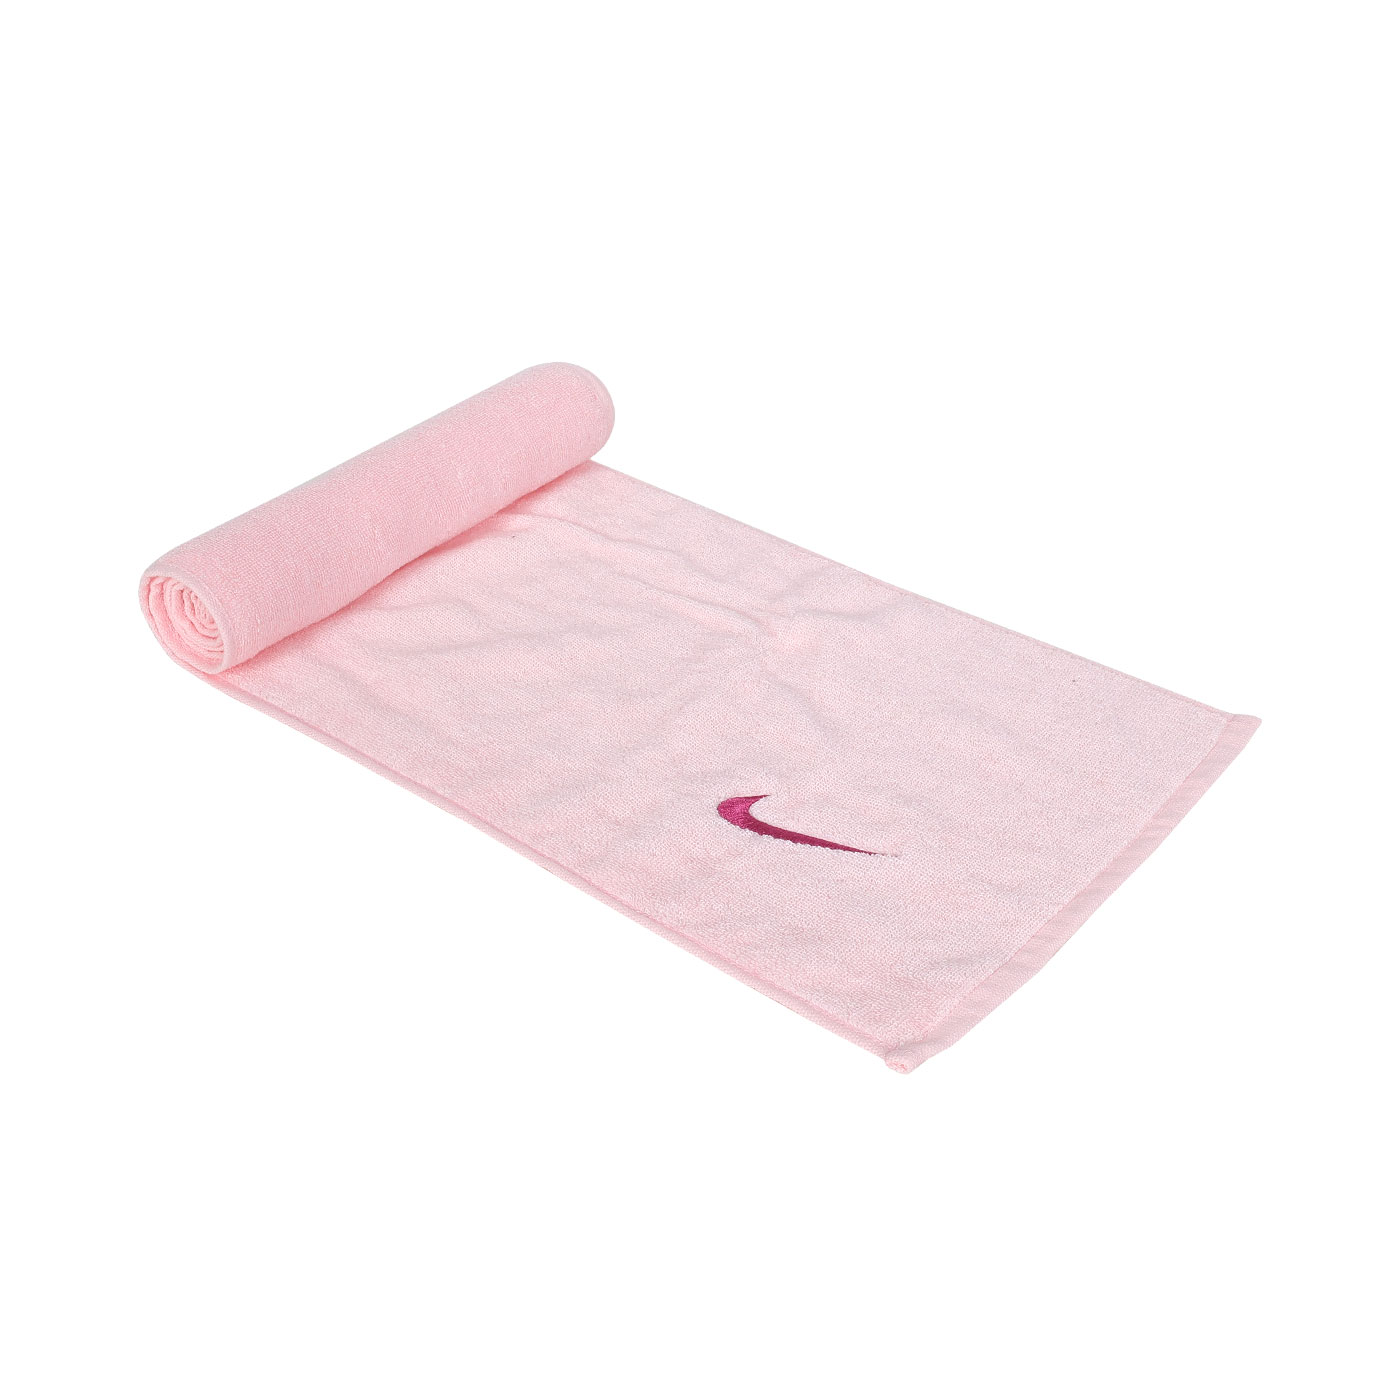 NIKE SOLID CORE 長型毛巾(120x25cm)  N1001540606NS